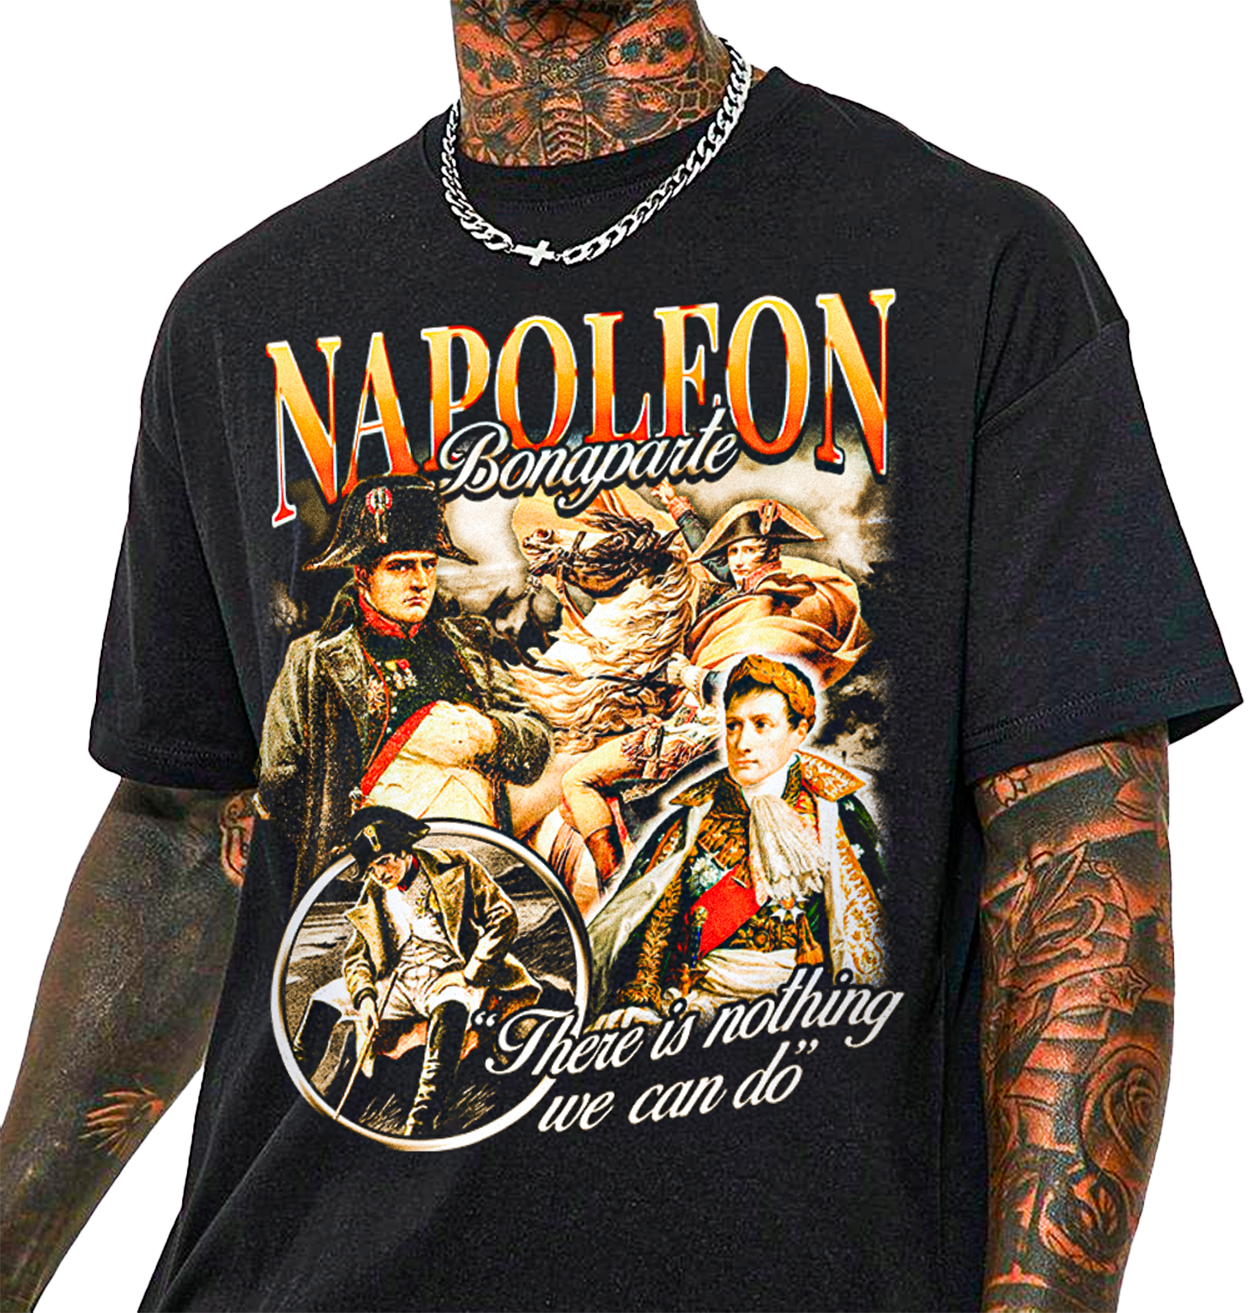 Napoleon Bonaparte T-Shirt!